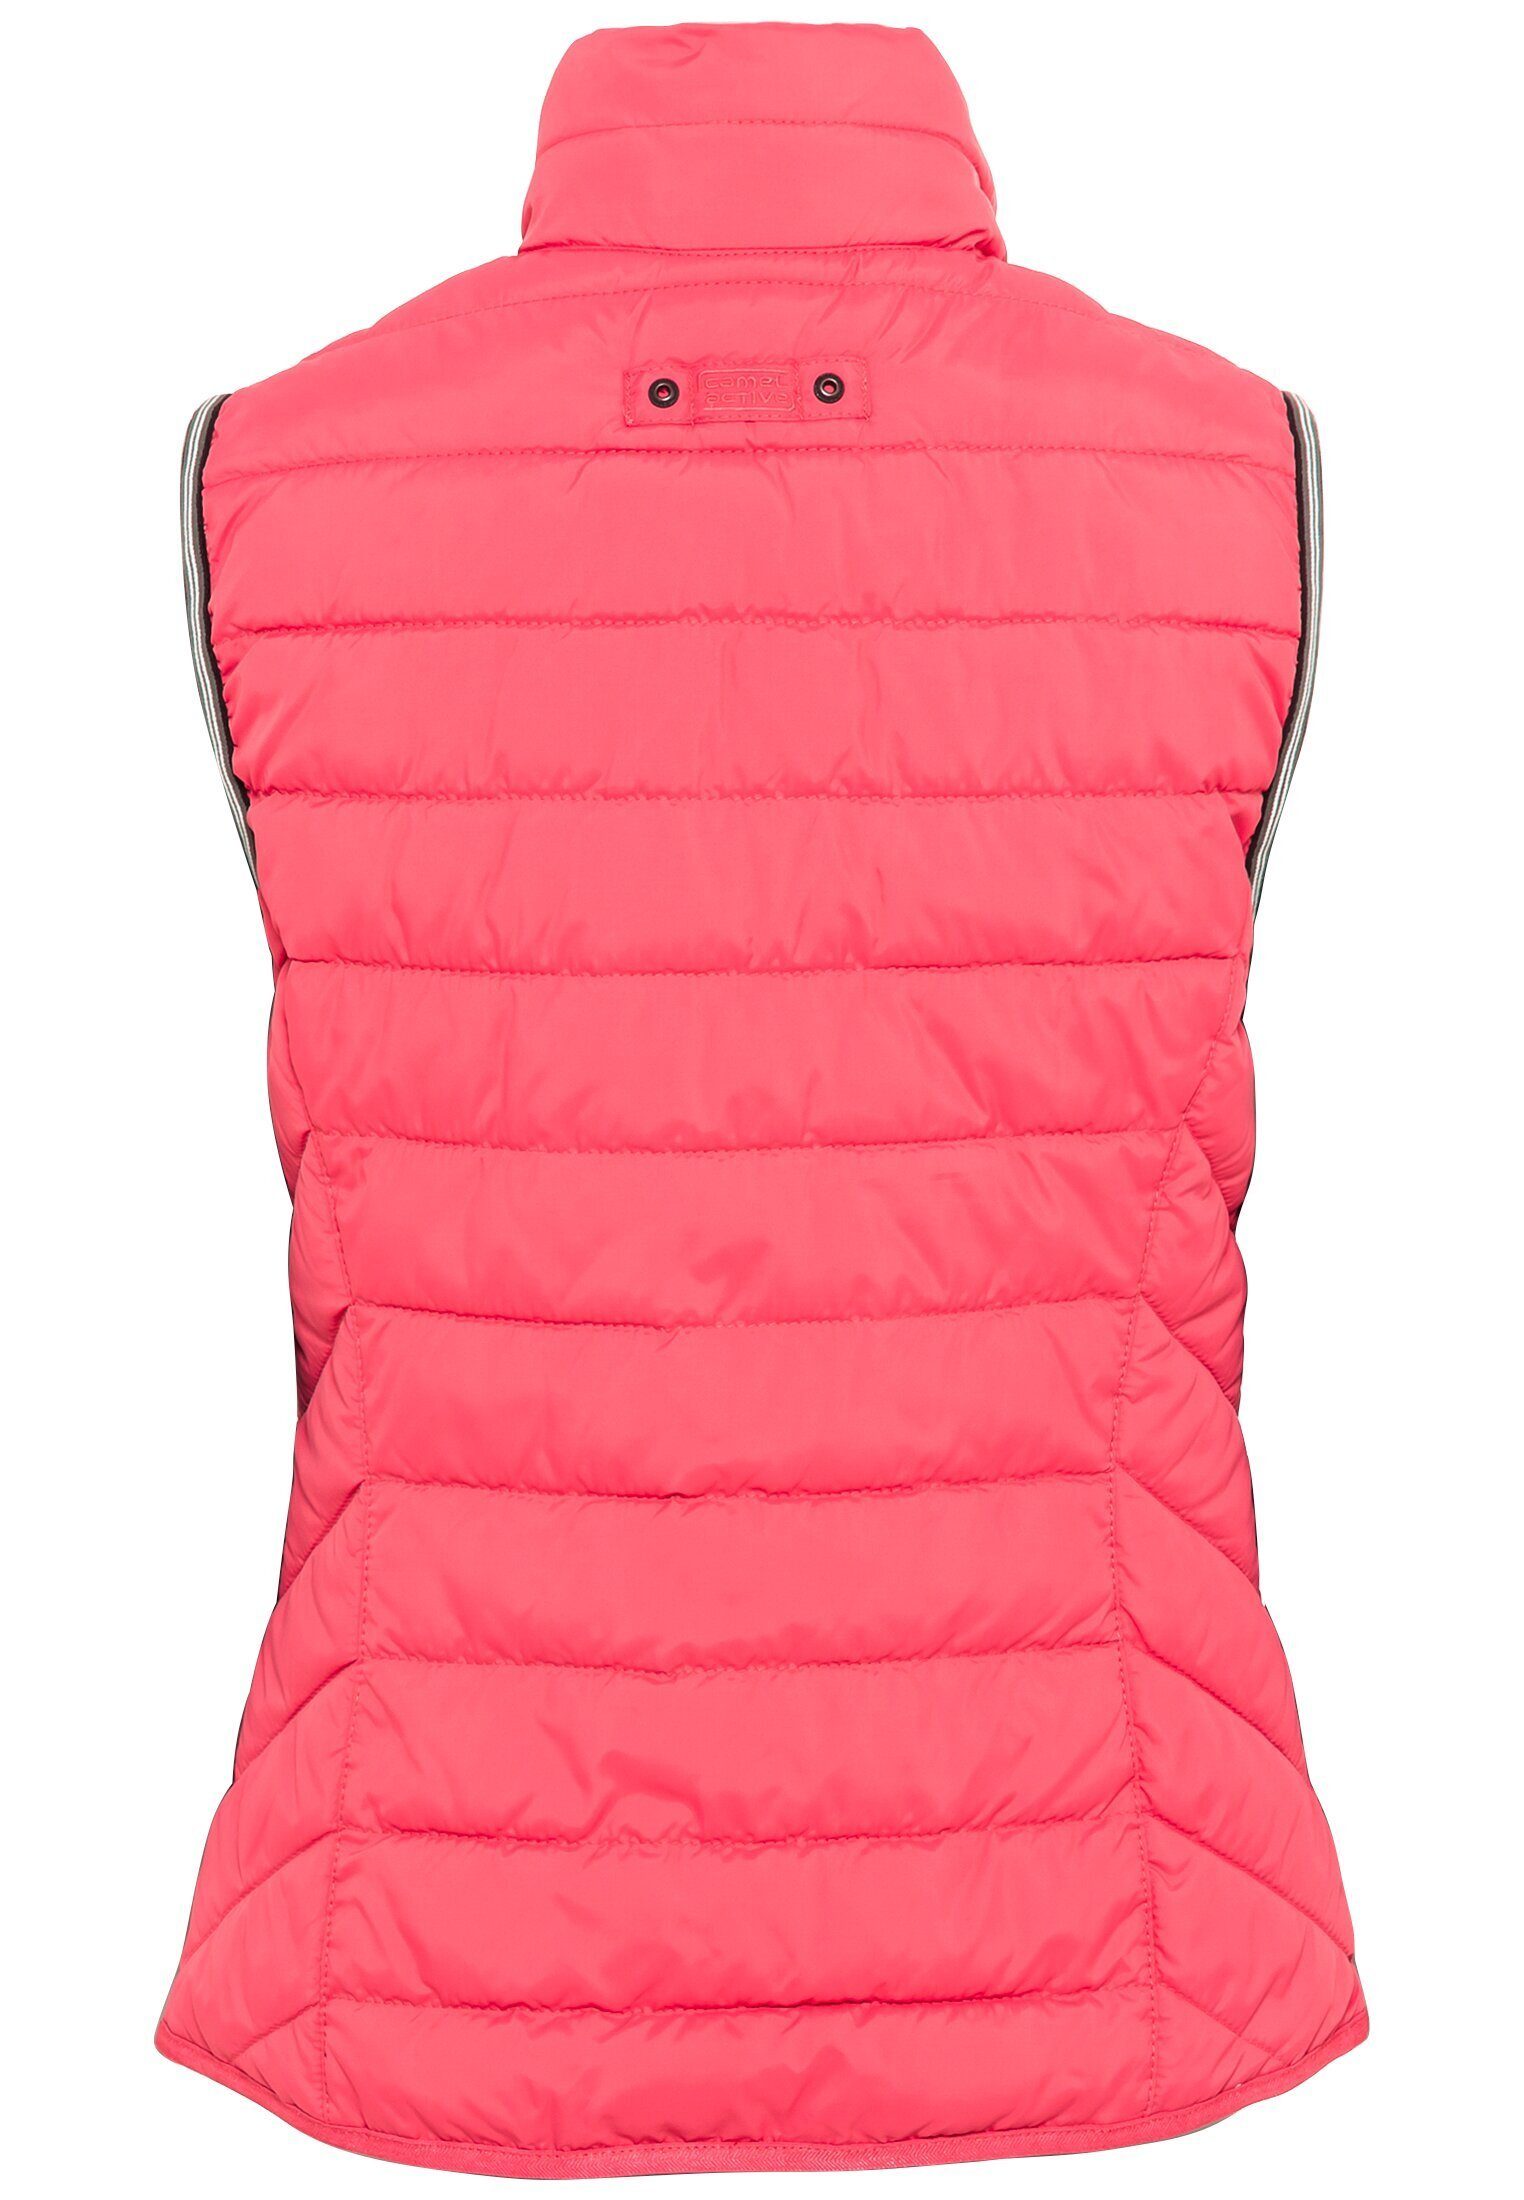 Steppweste Pink mit active Stehkragen aus Polyester camel recyceltem